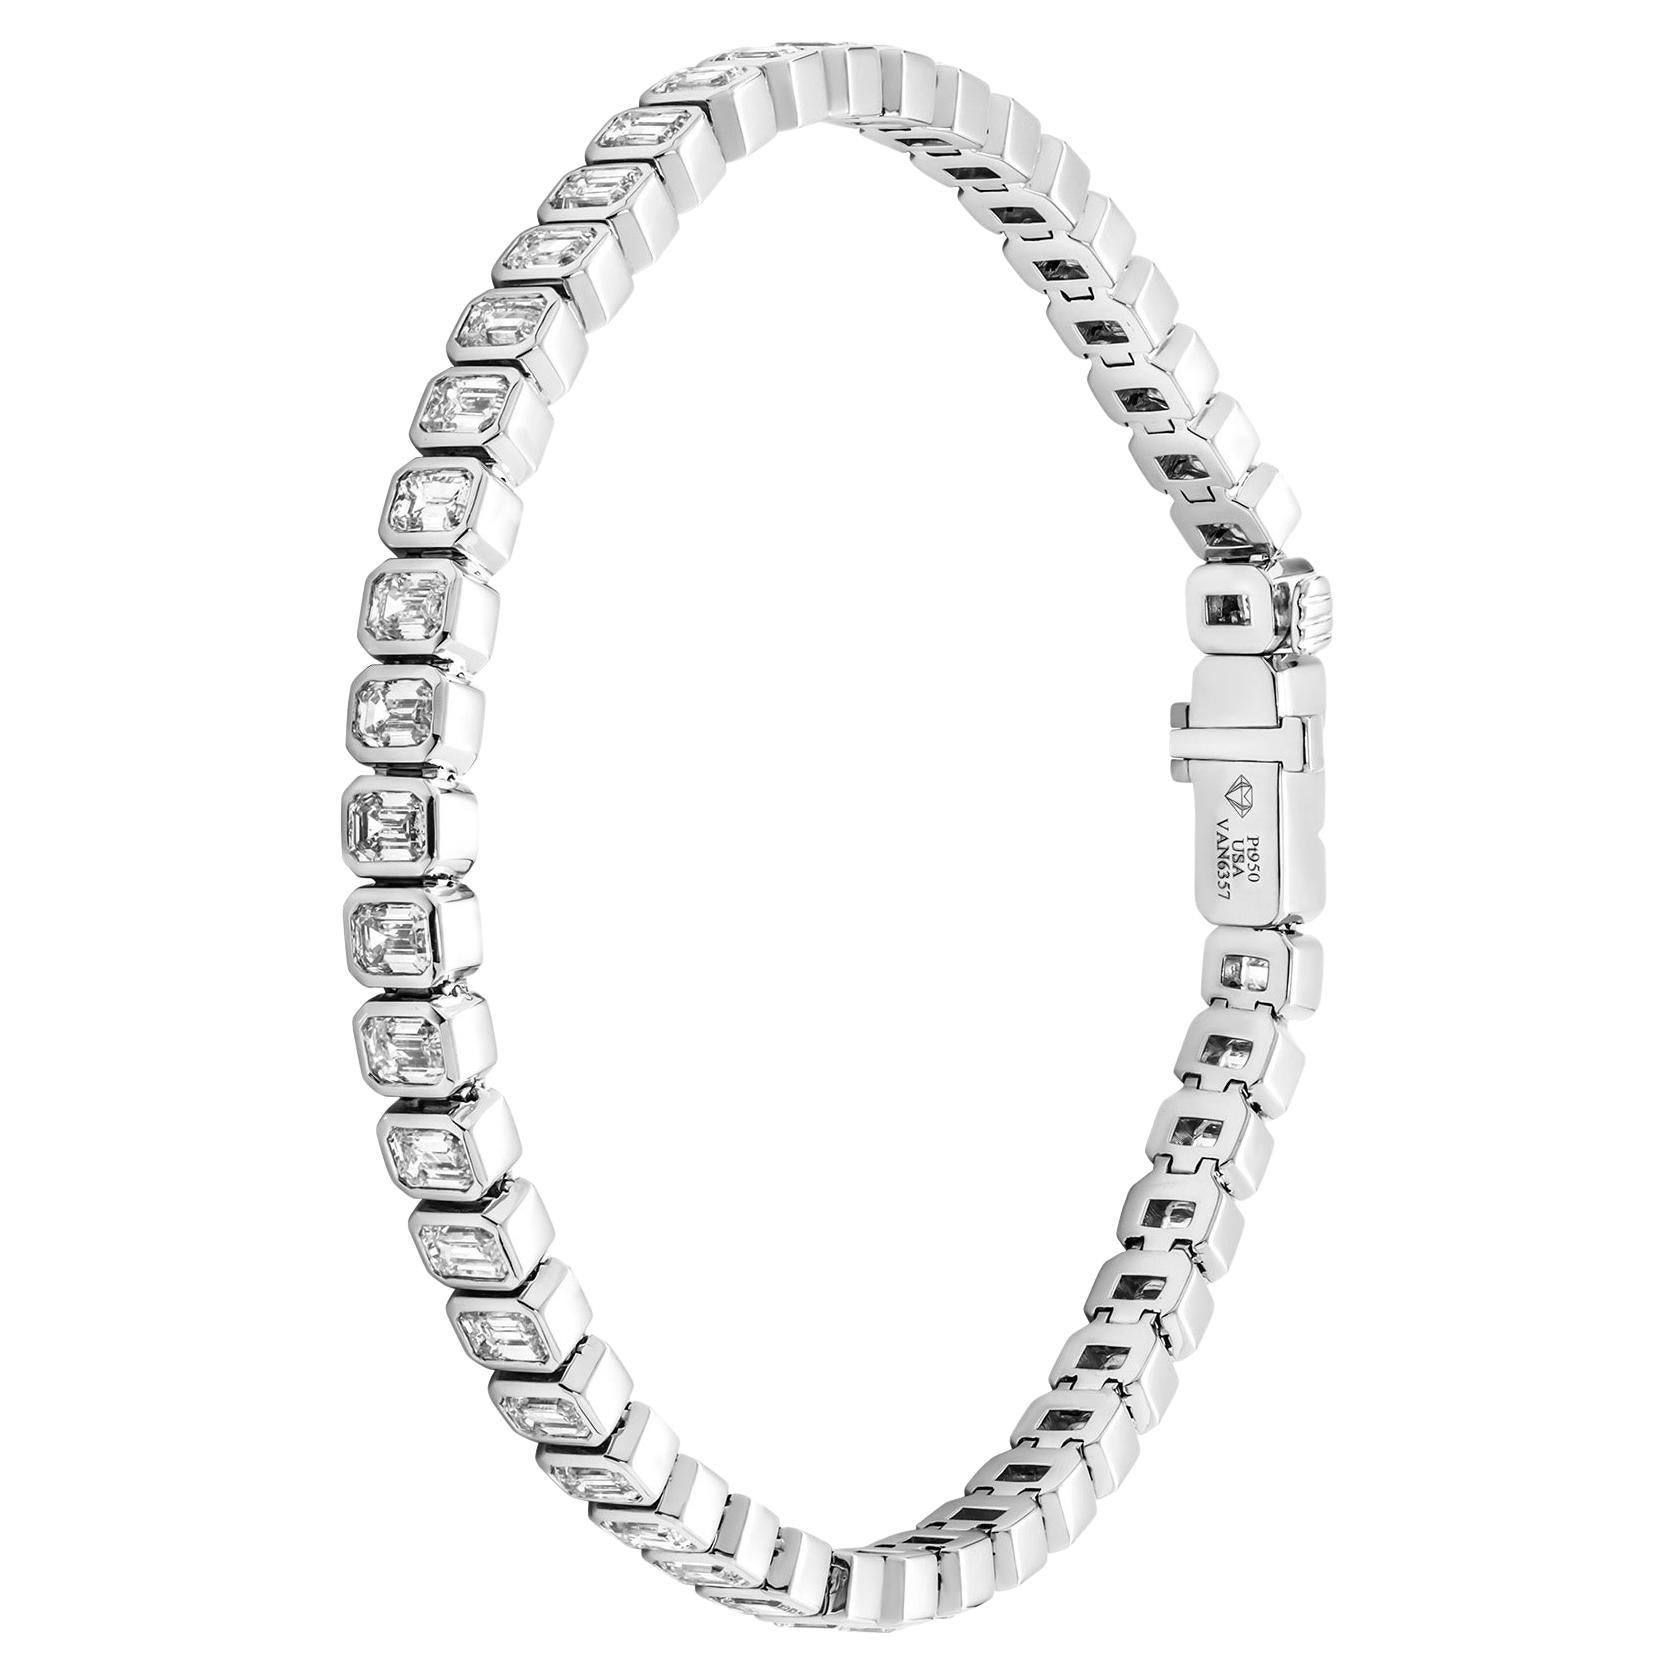 Emerald cut diamond Bezel bracelet in Platinum